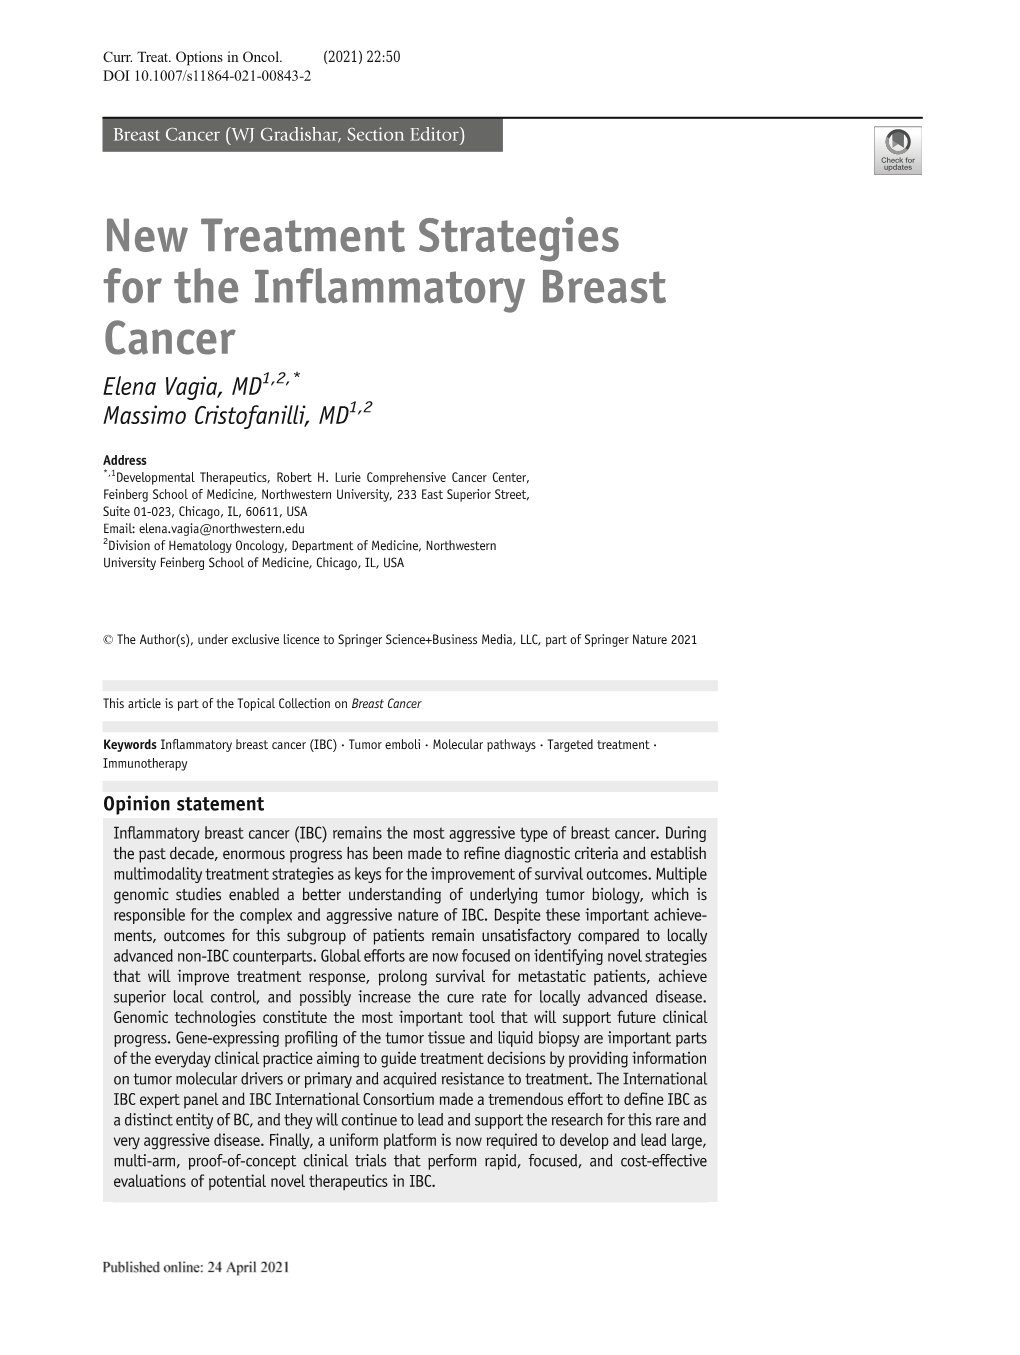 New Treatment Strategies for the Inflammatory Breast Cancer Elena Vagia, MD1,2,* Massimo Cristofanilli, MD1,2